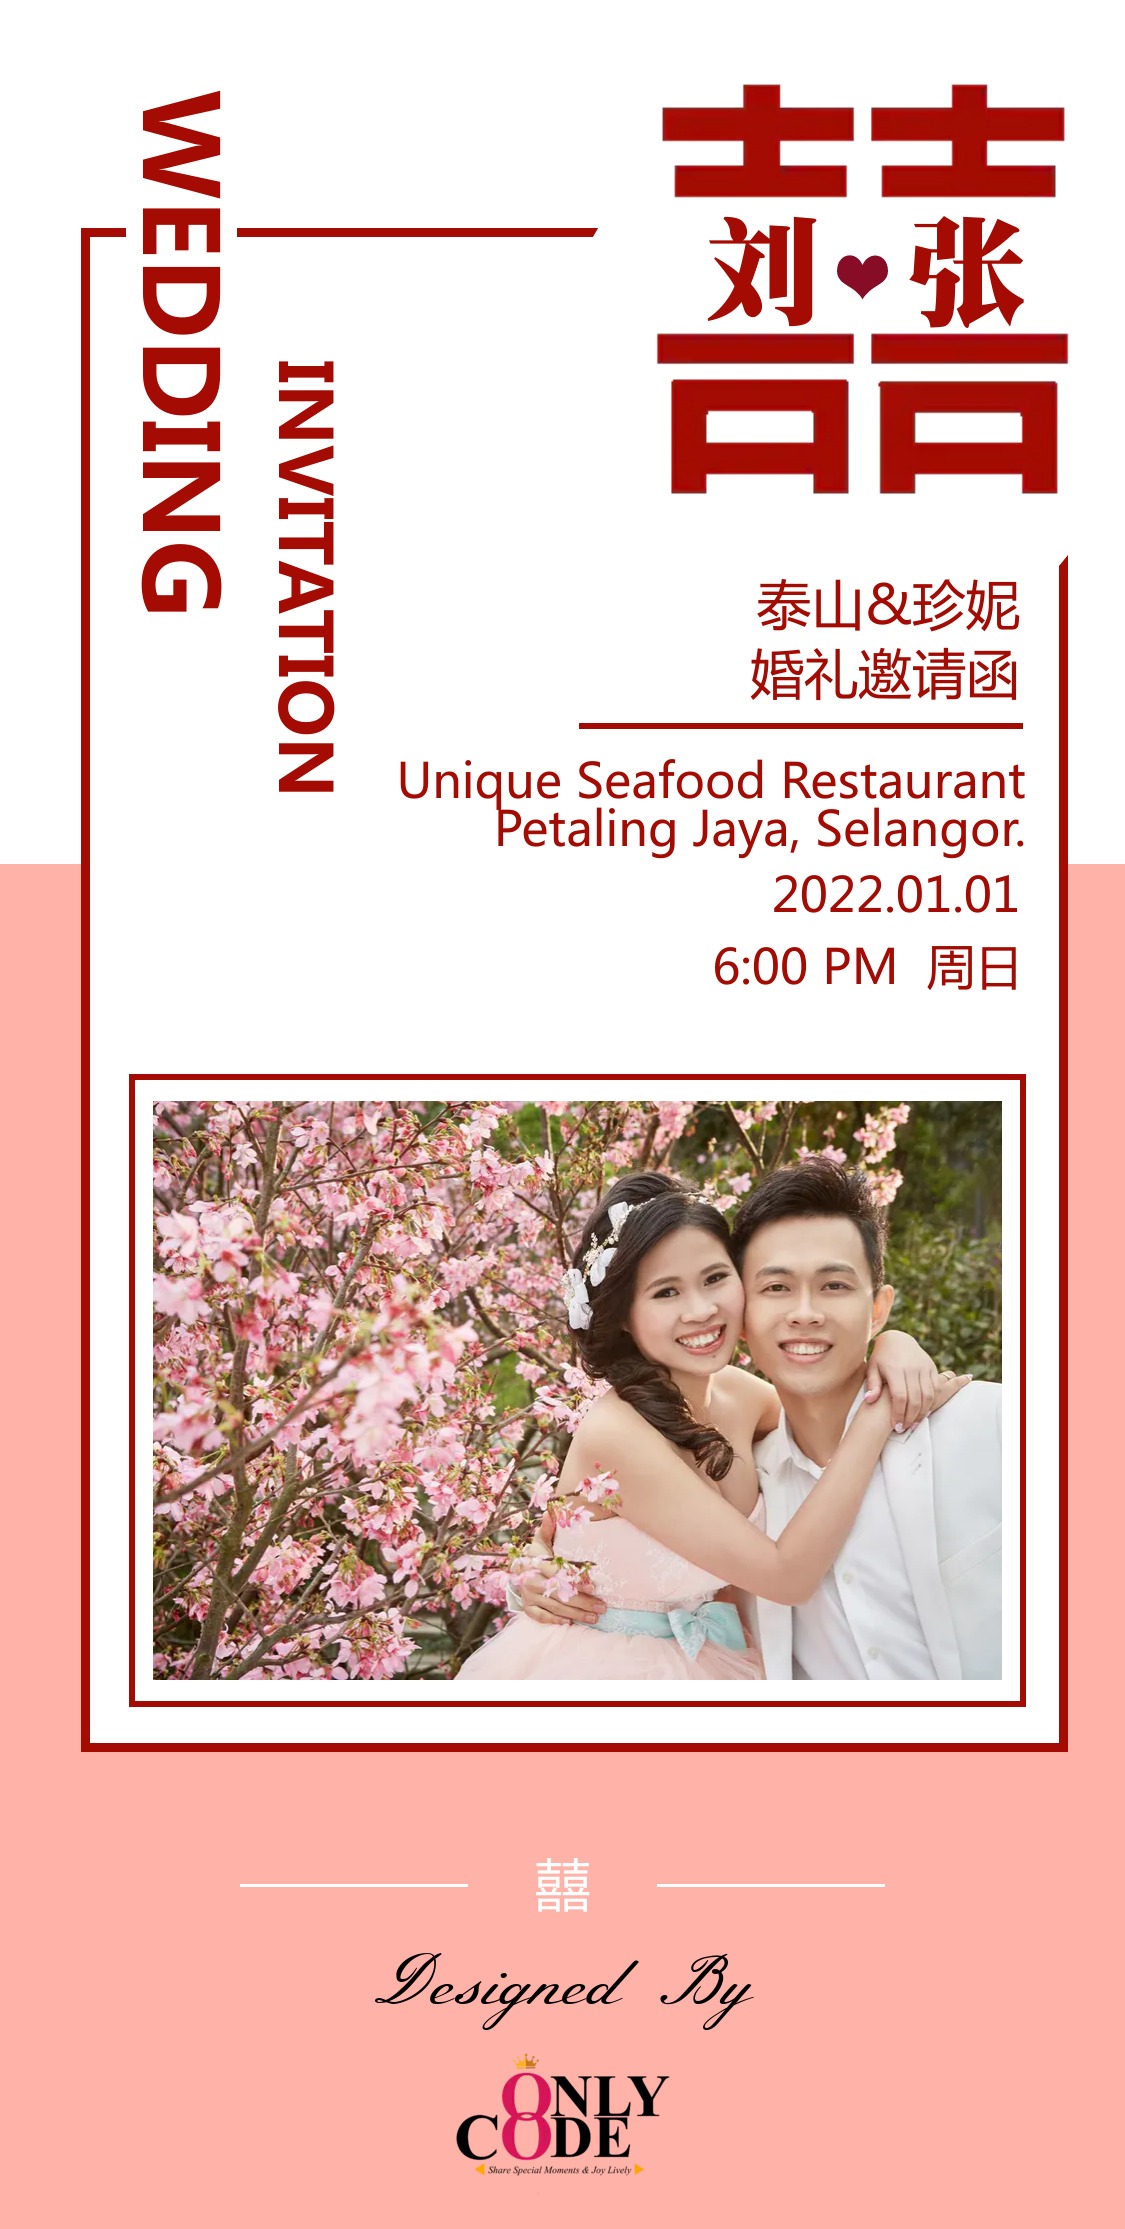 BASIC SAMPLE 标准参考|wedding invitation card|baby shower invitations|e invitation card|请柬|邀请 函|结婚 请柬